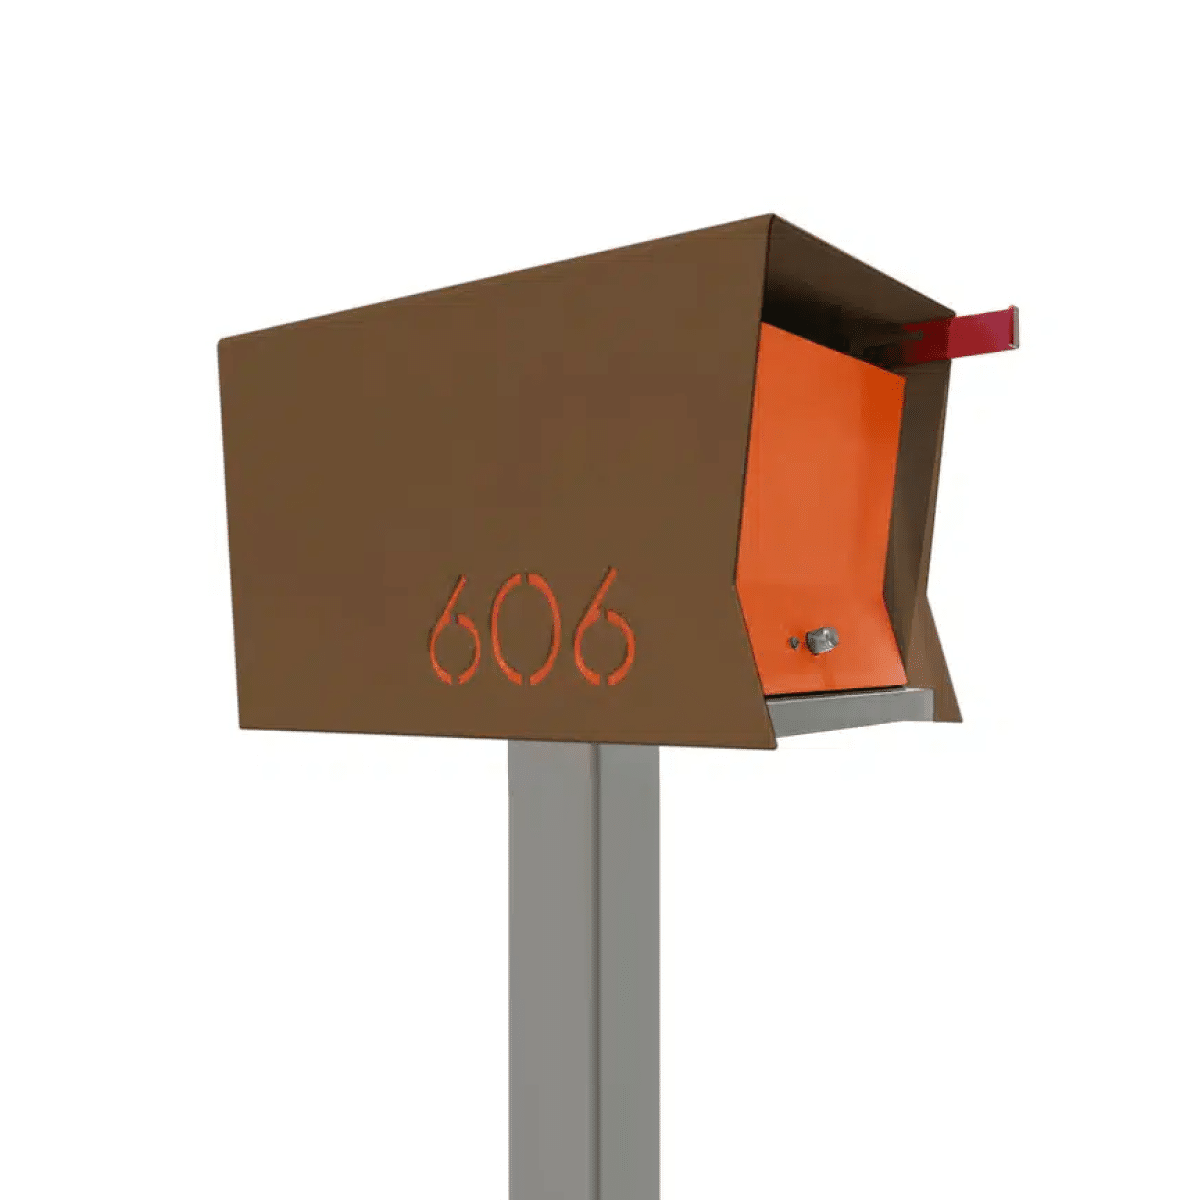 The Original Retrobox in Coconut – Modern Mailbox